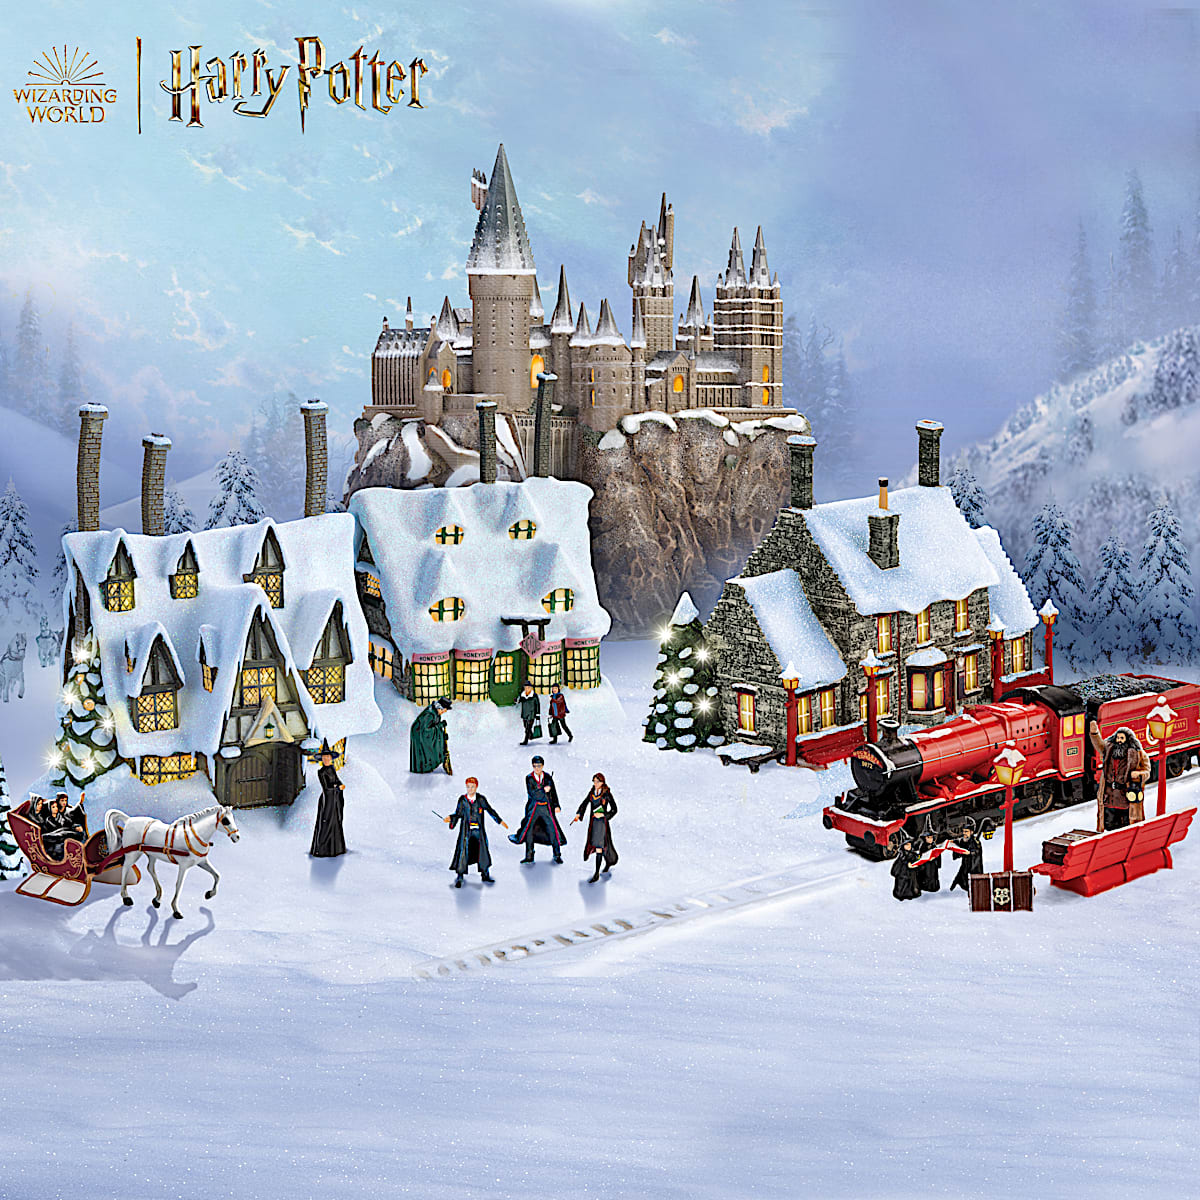 Harry Potter Village